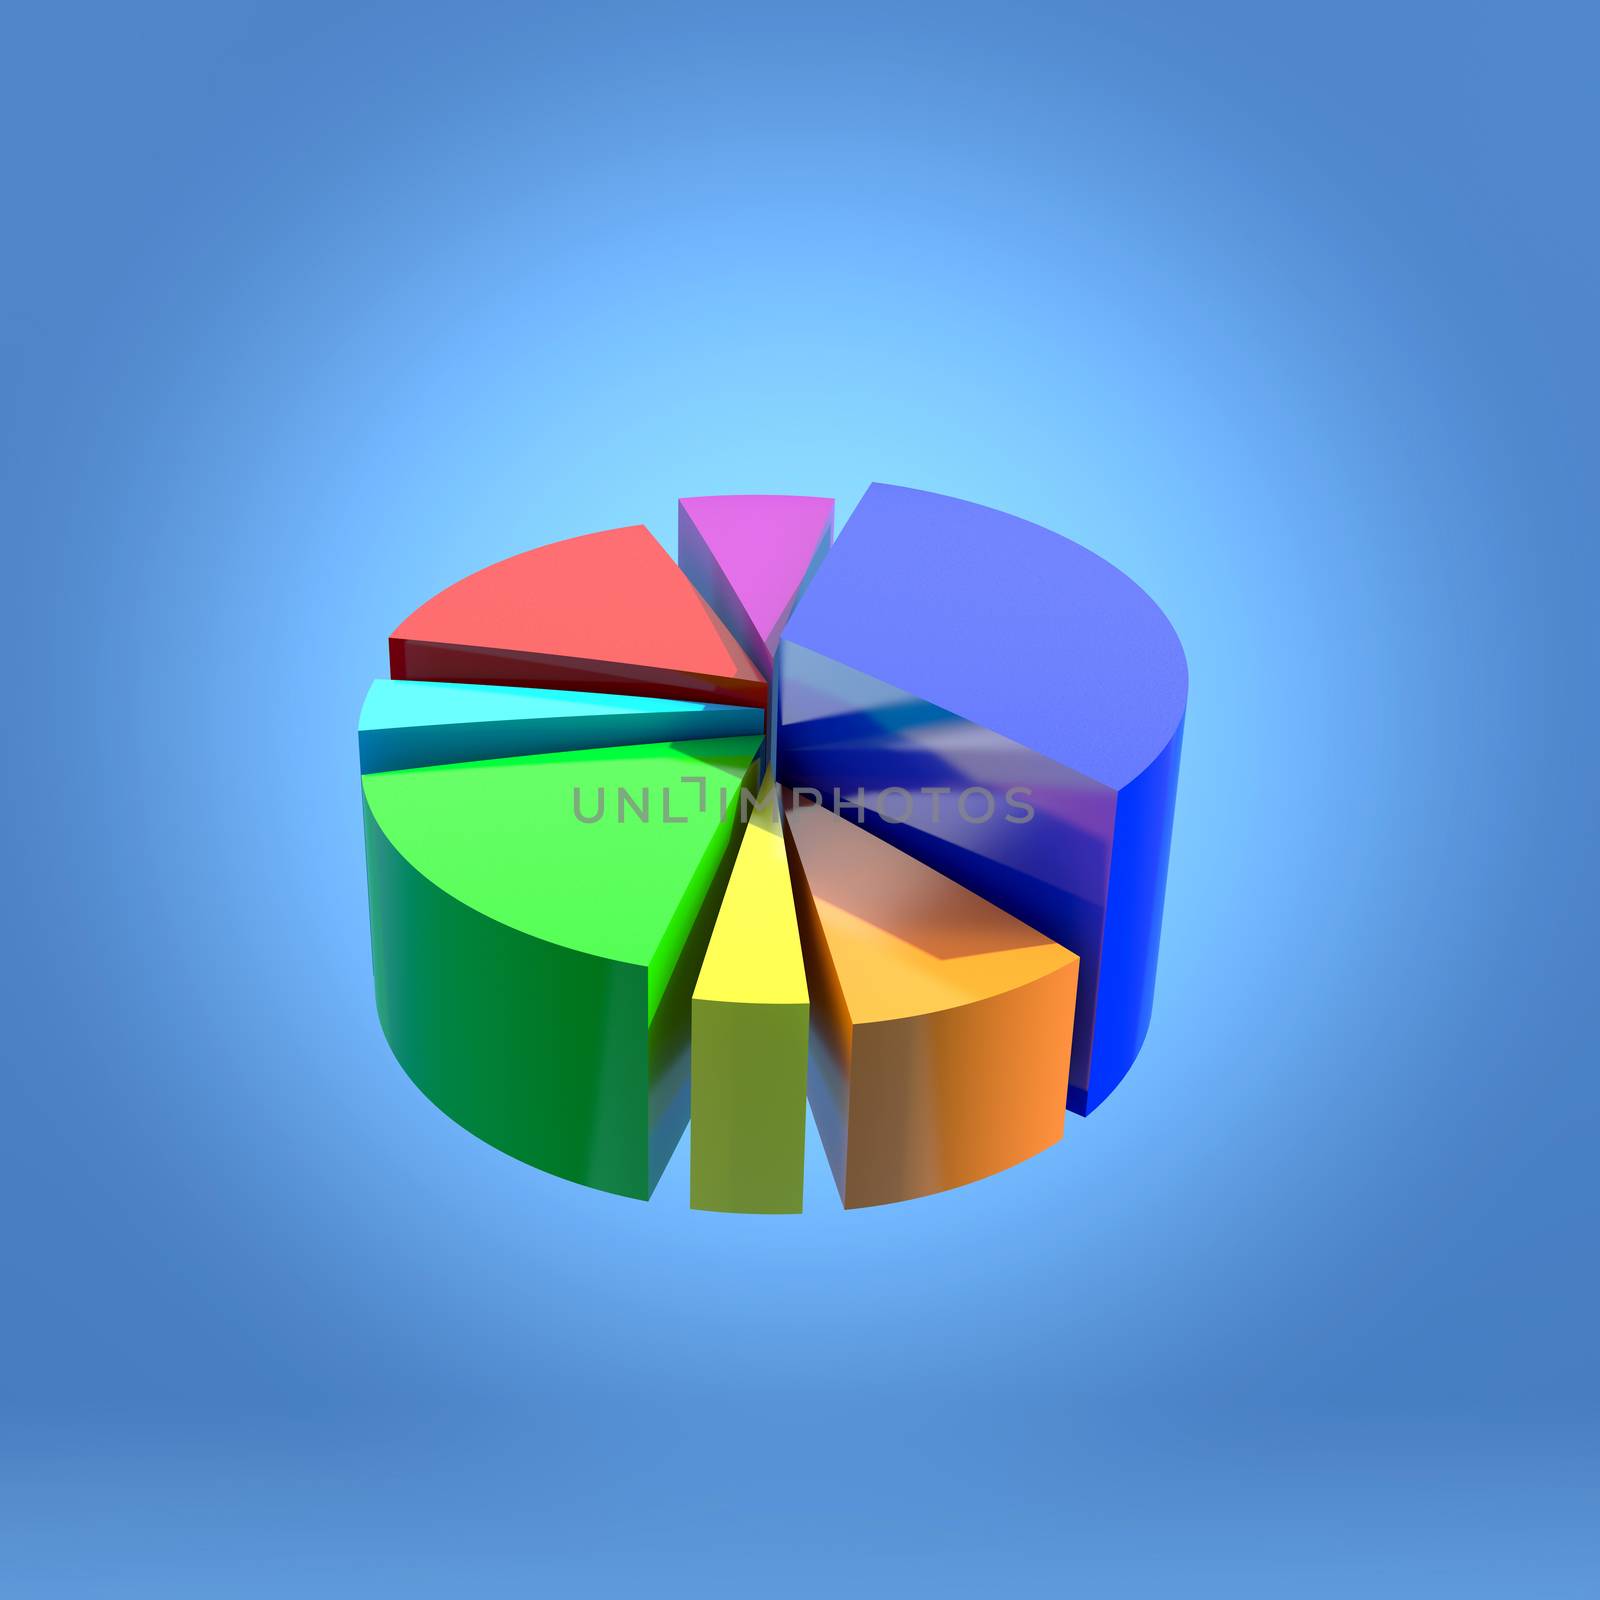 3D circular statistics graphic background 3d illustration